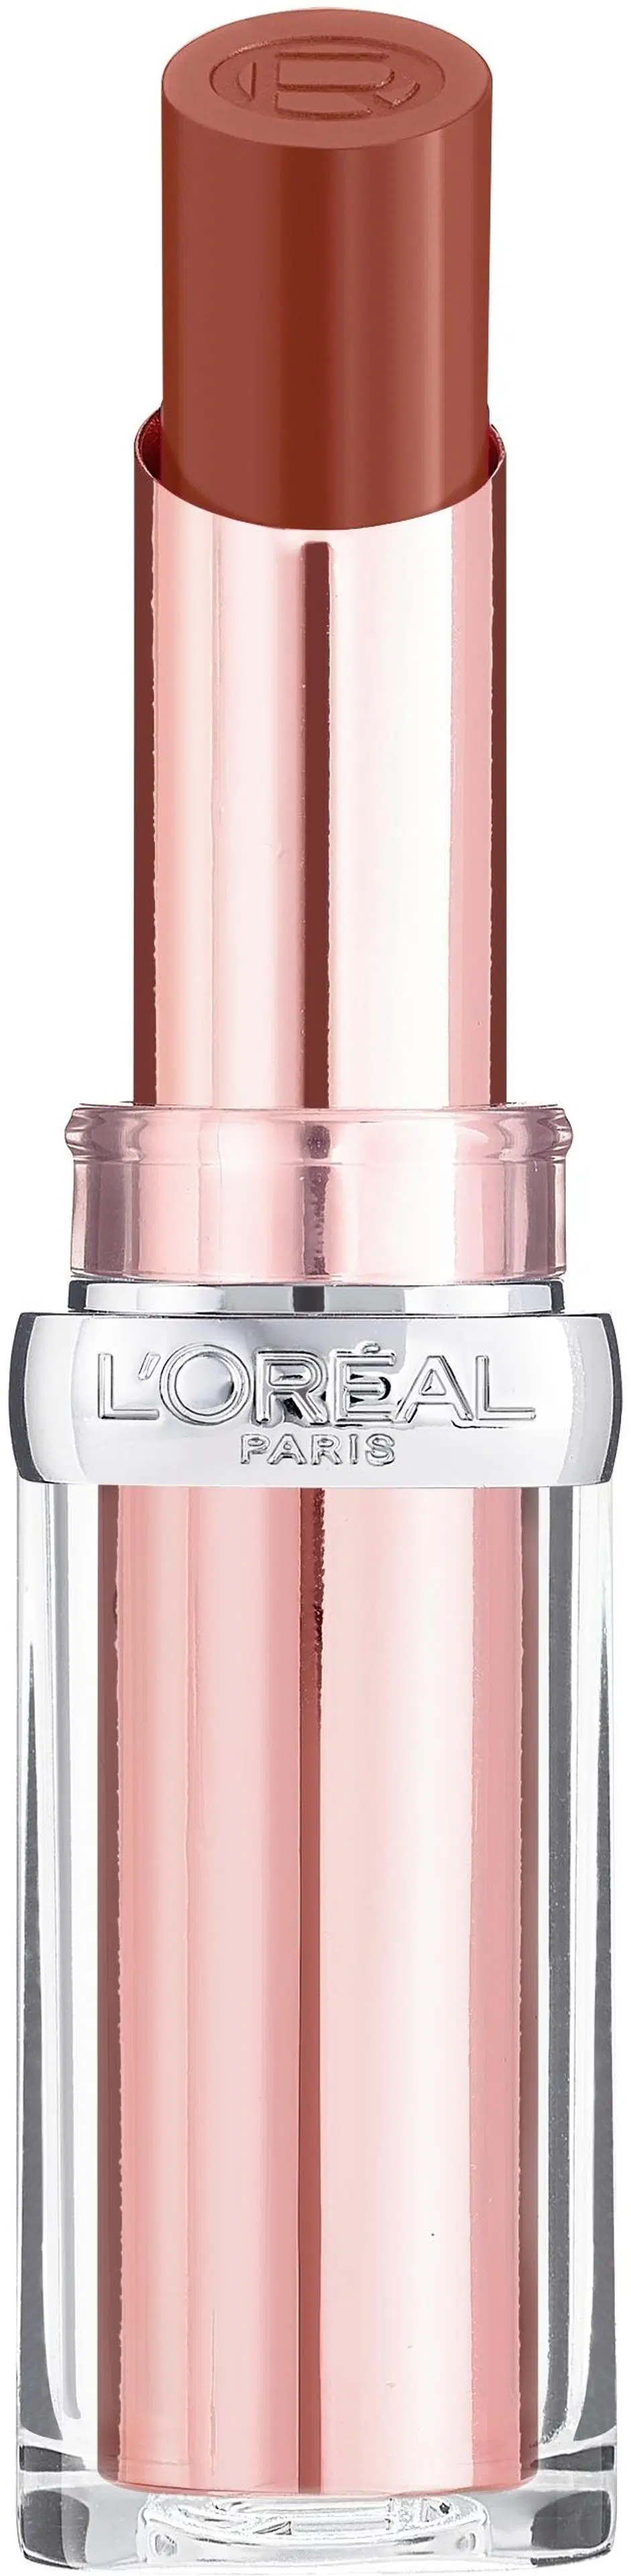 L'Oréal Paris Glow Paradise Balm-in-Lipstick huulipuna 3,8 g